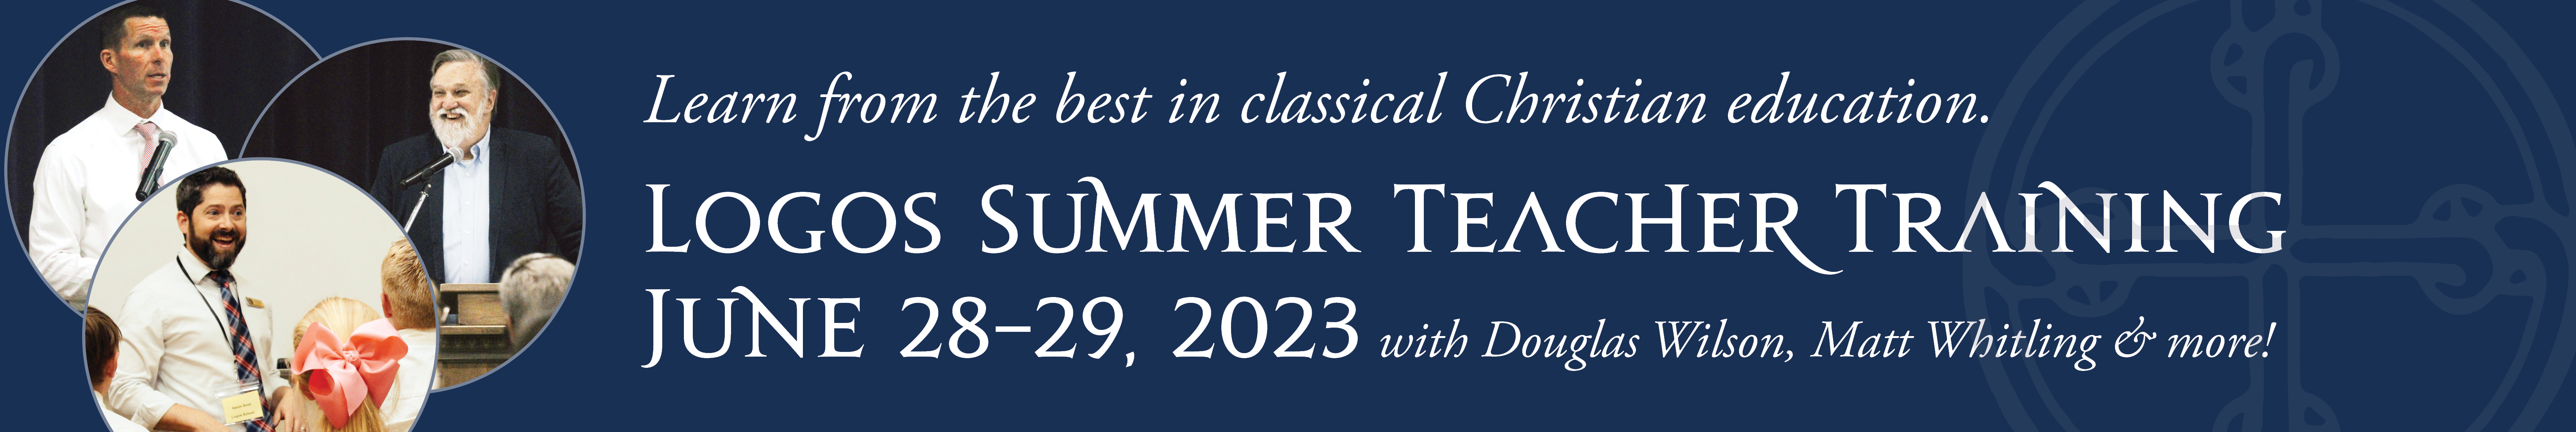 2023 Logos Summer Training Mablog banner